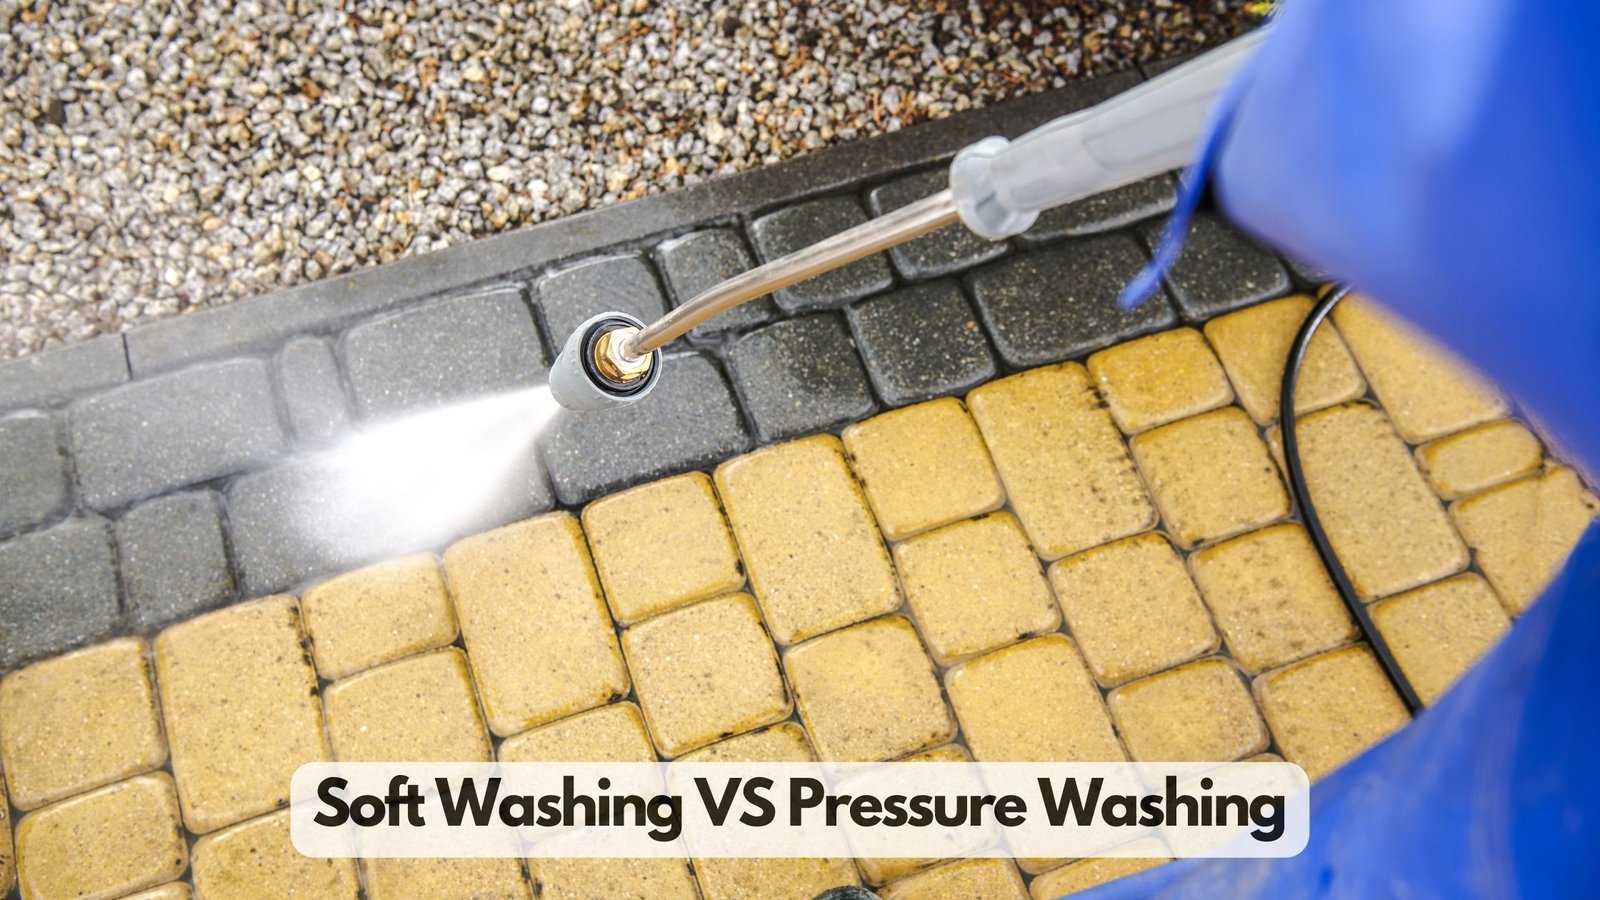 Soft Washing VS Pressure Washing